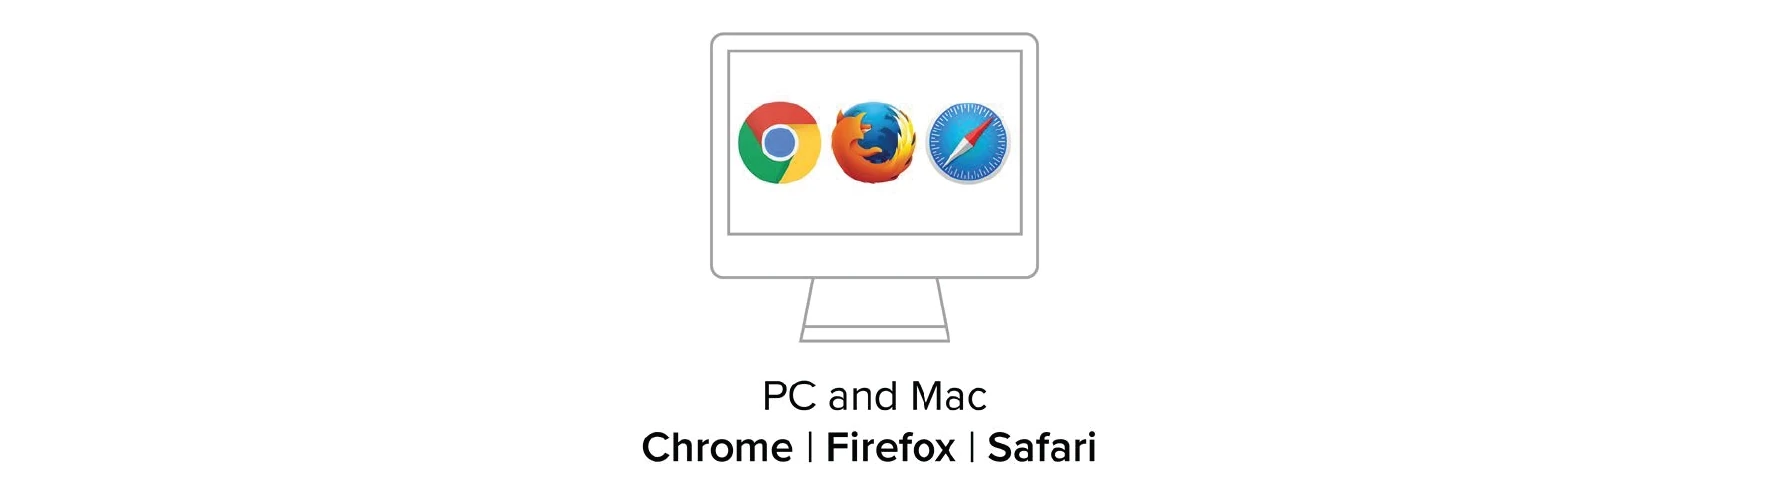 PC and Mac image, Chrome, Firefox and Safari